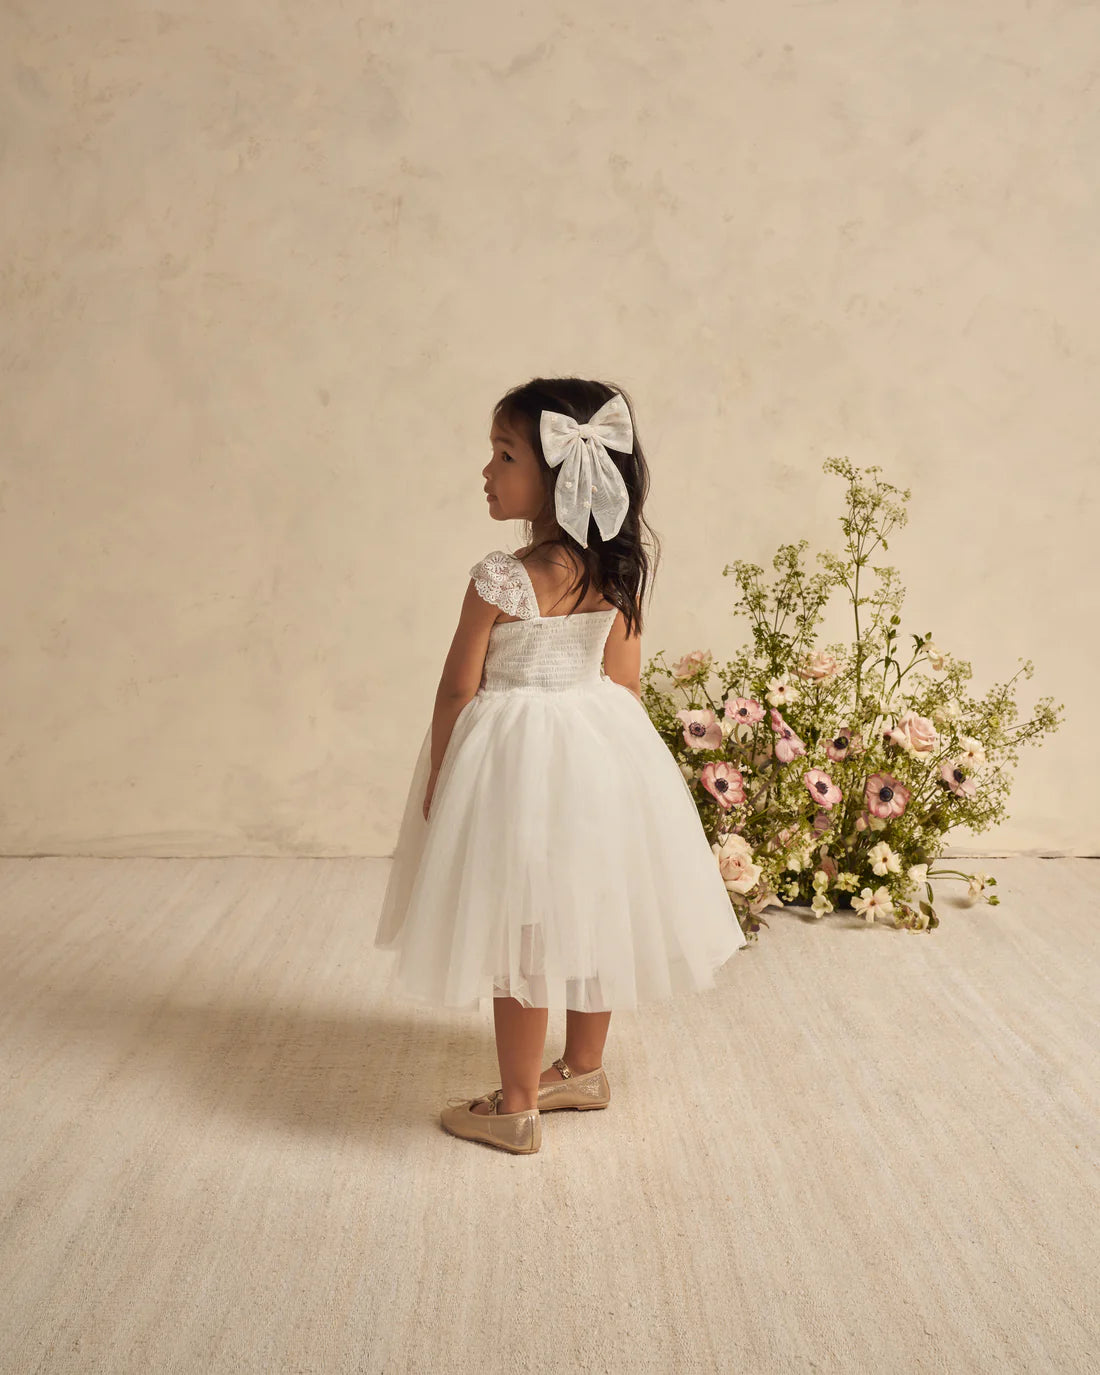 Camilla Dress in White  - Doodlebug's Children's Boutique